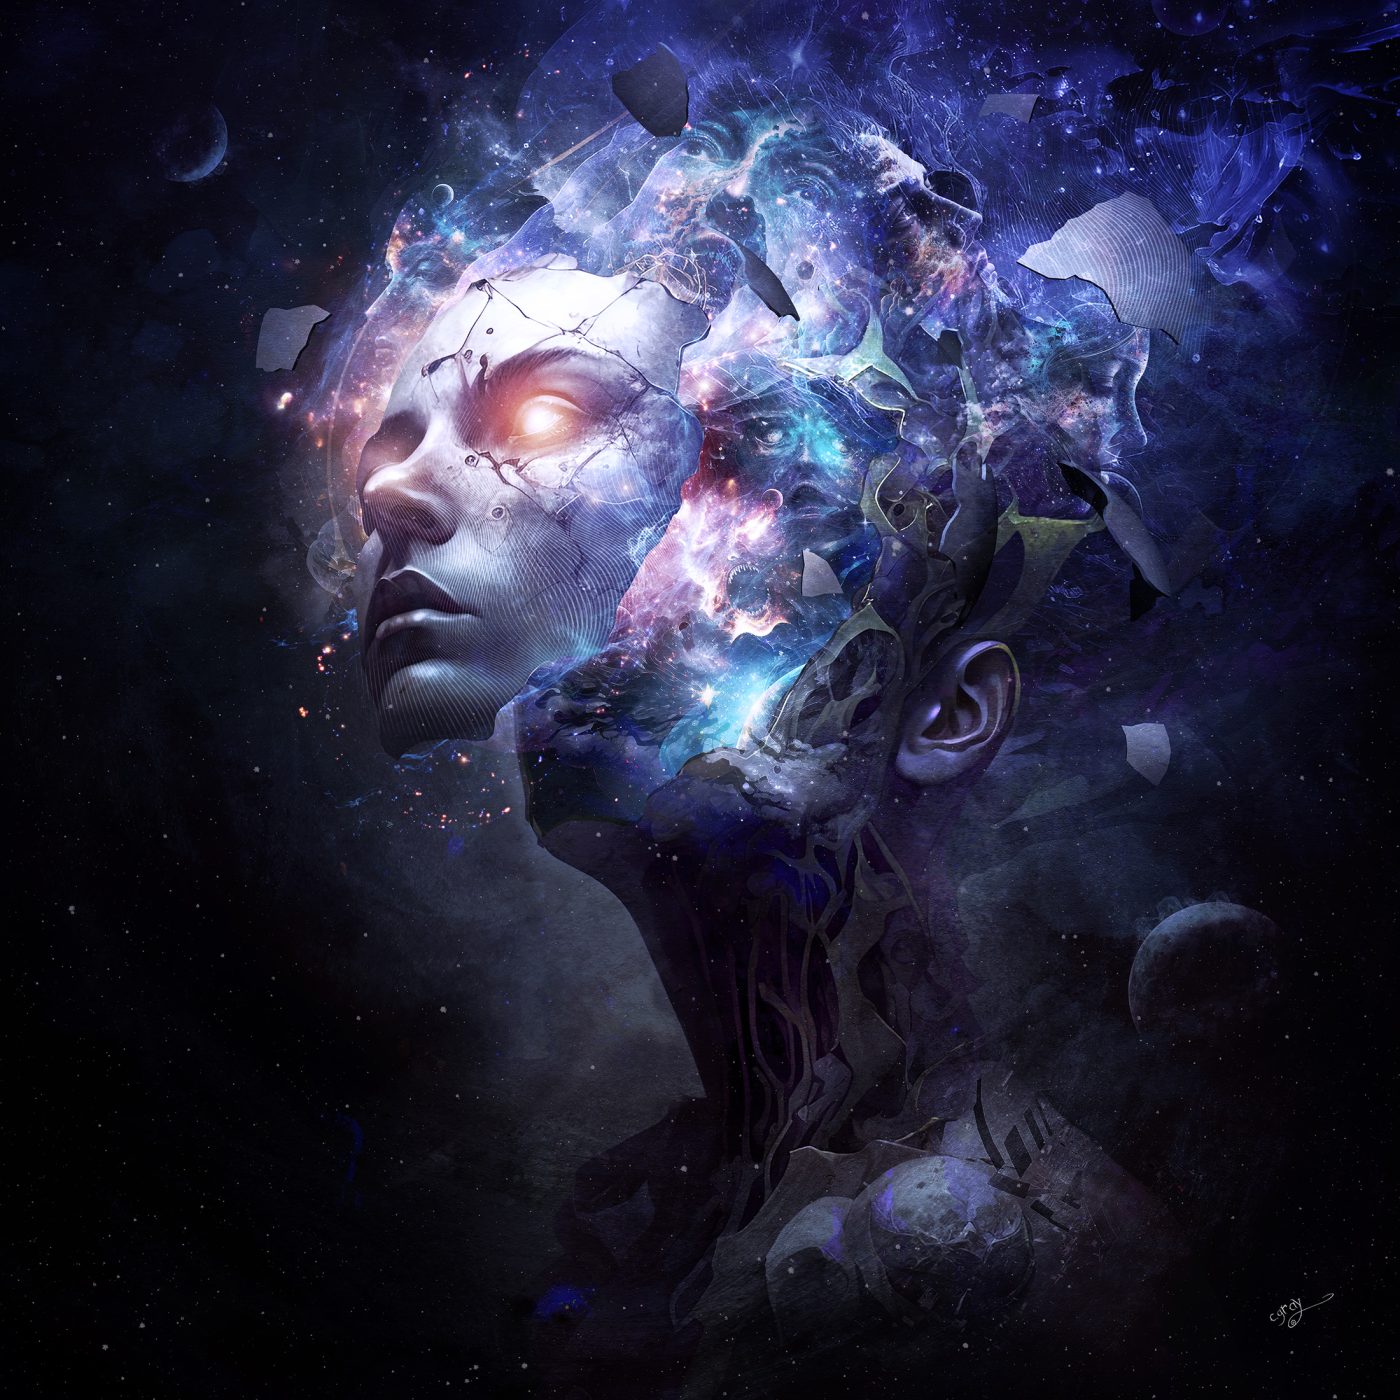 Surreal digital art of a person having a cosmic spiritual awaking, dmt, lsd, higher consciousness. Art by Cameron Gray